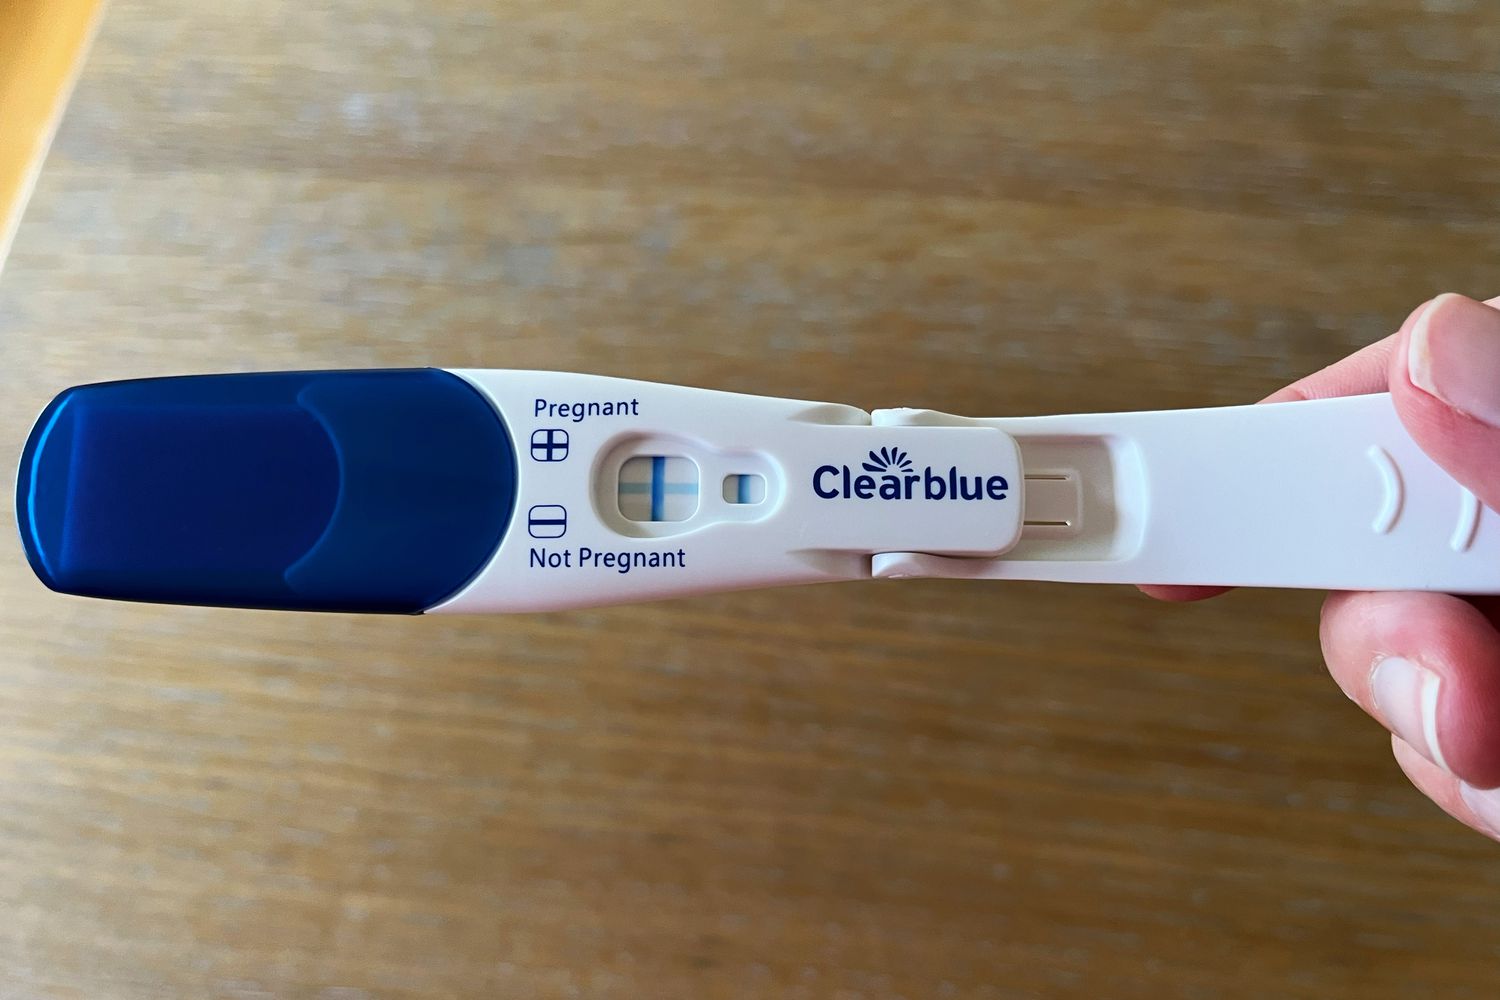 prt-pregnancy-tests-clearblue-flip-click-maria-rowella-9-cbb7d5f9458844188a0a86e993b46e1d.jpeg